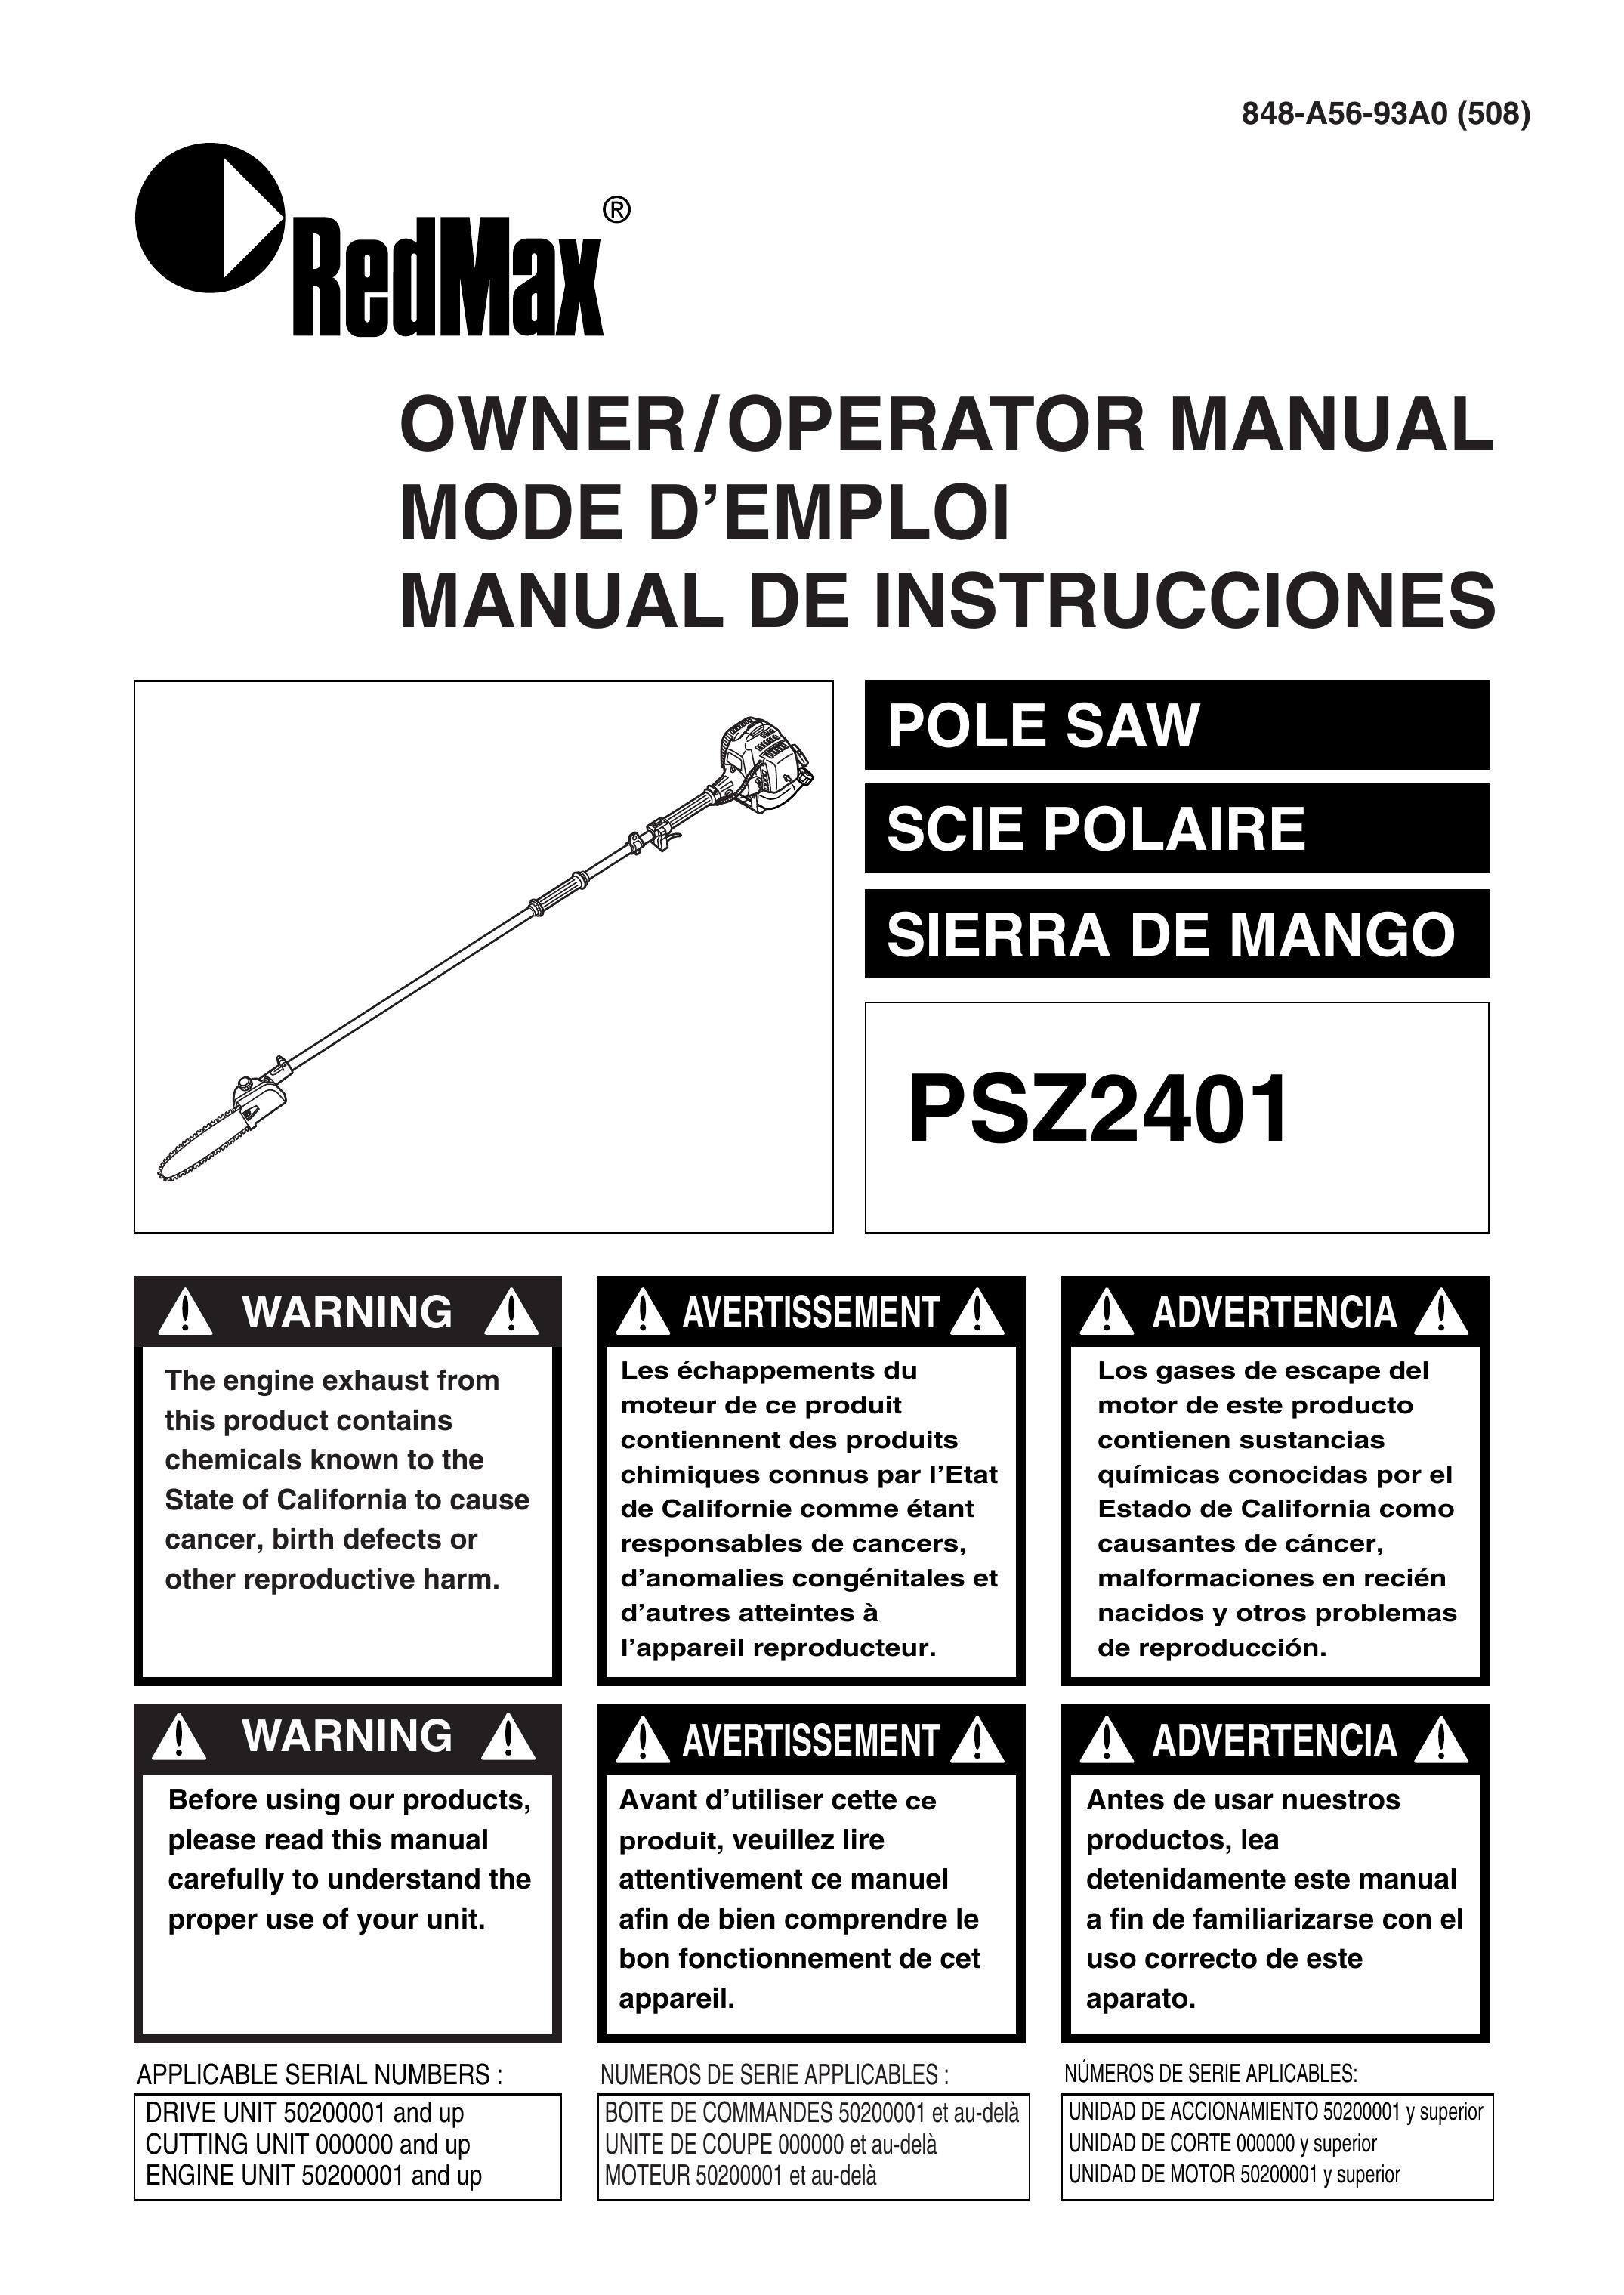 RedMax PSZ2401 Pole Saw User Manual